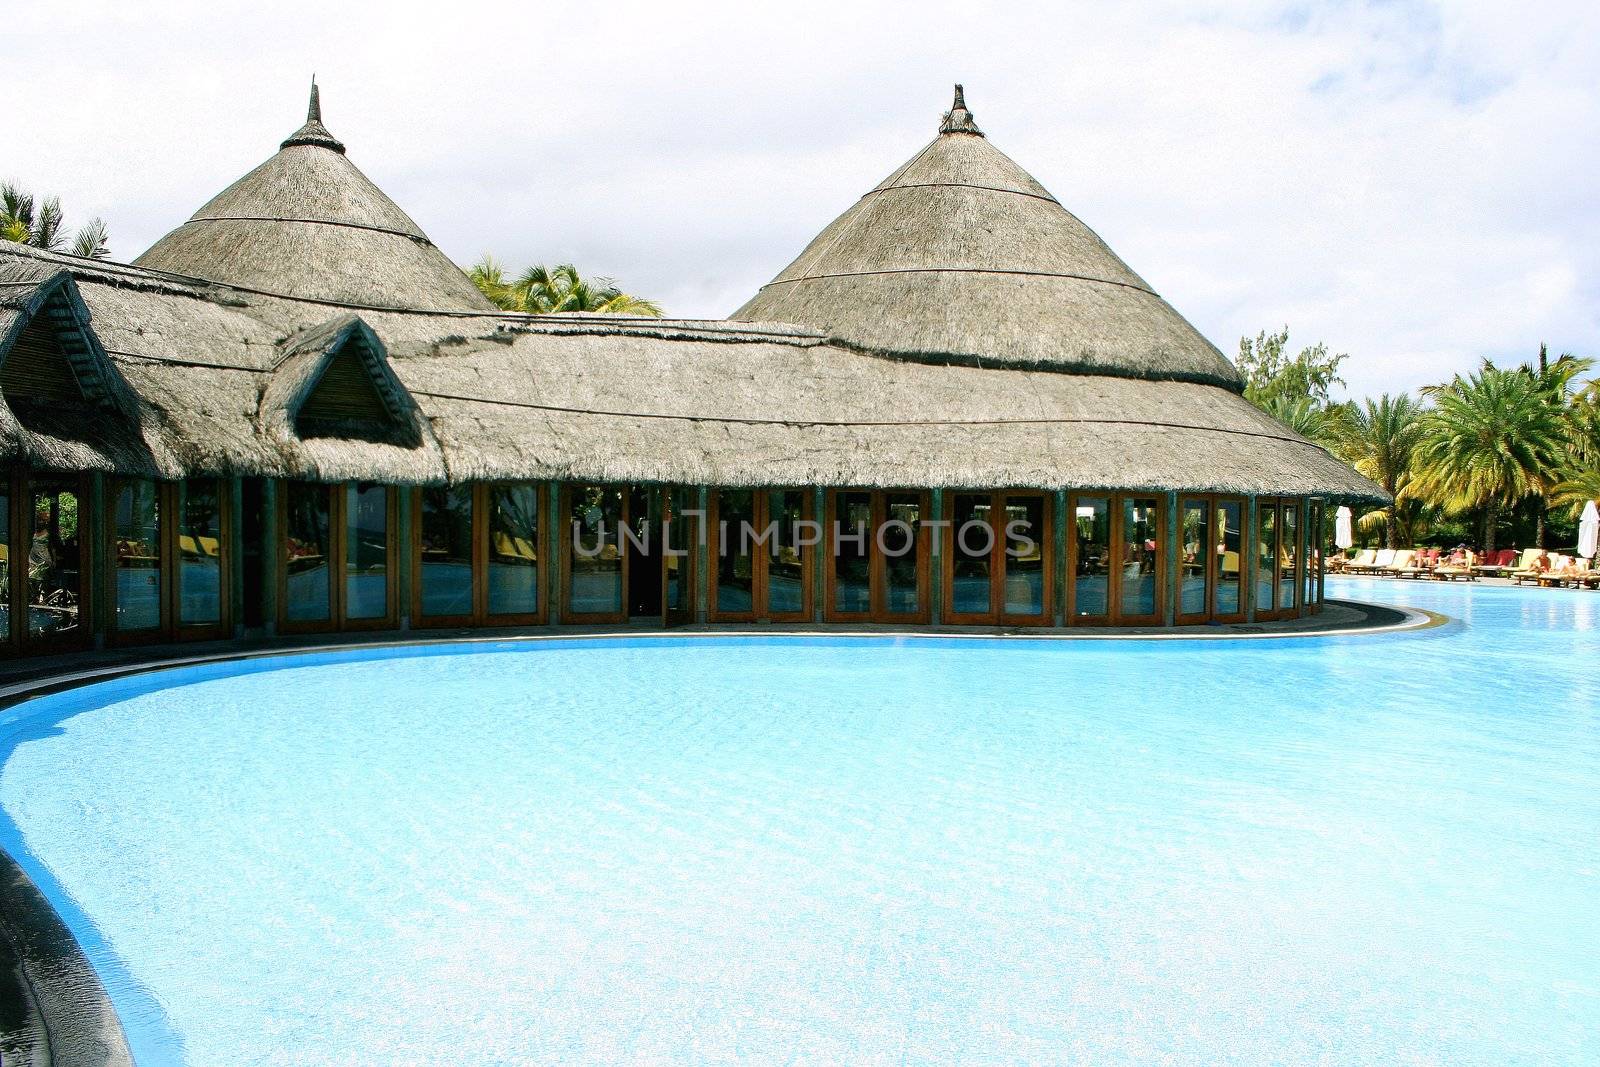 Large pool near the villa on the tropical island